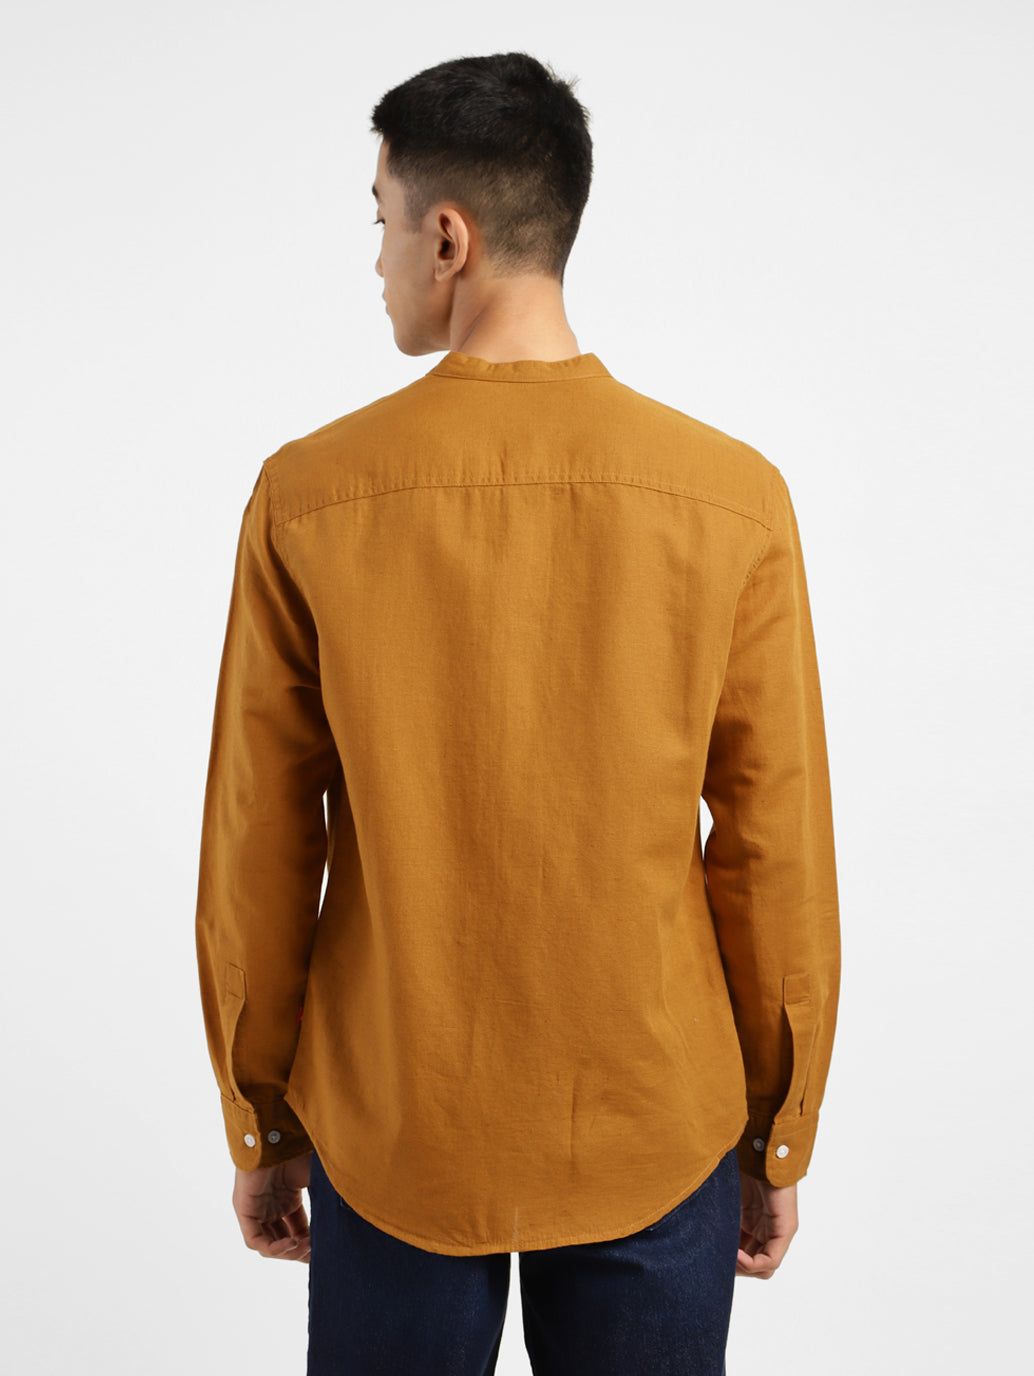 Men's Solid Slim Fit Linen Shirt Orange